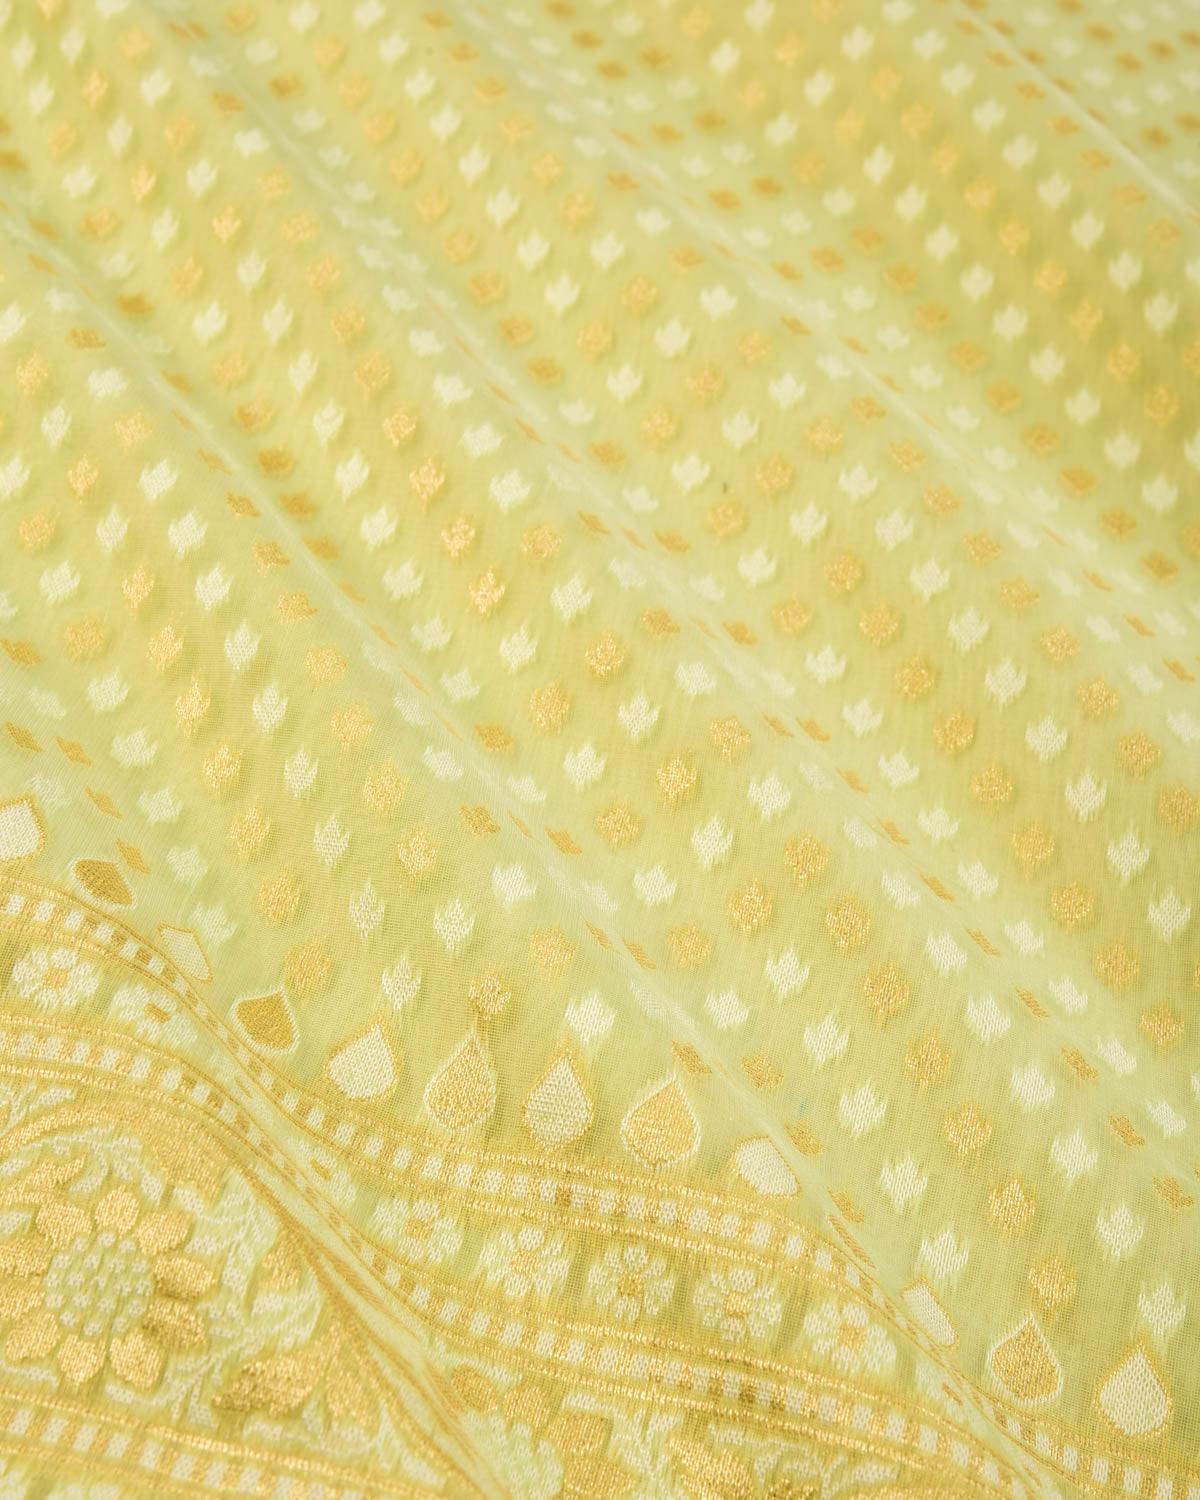 Sage Green Banarasi Gold Zari & White Chevron Buti Cutwork Brocade Woven Art Cotton Silk Saree - By HolyWeaves, Benares